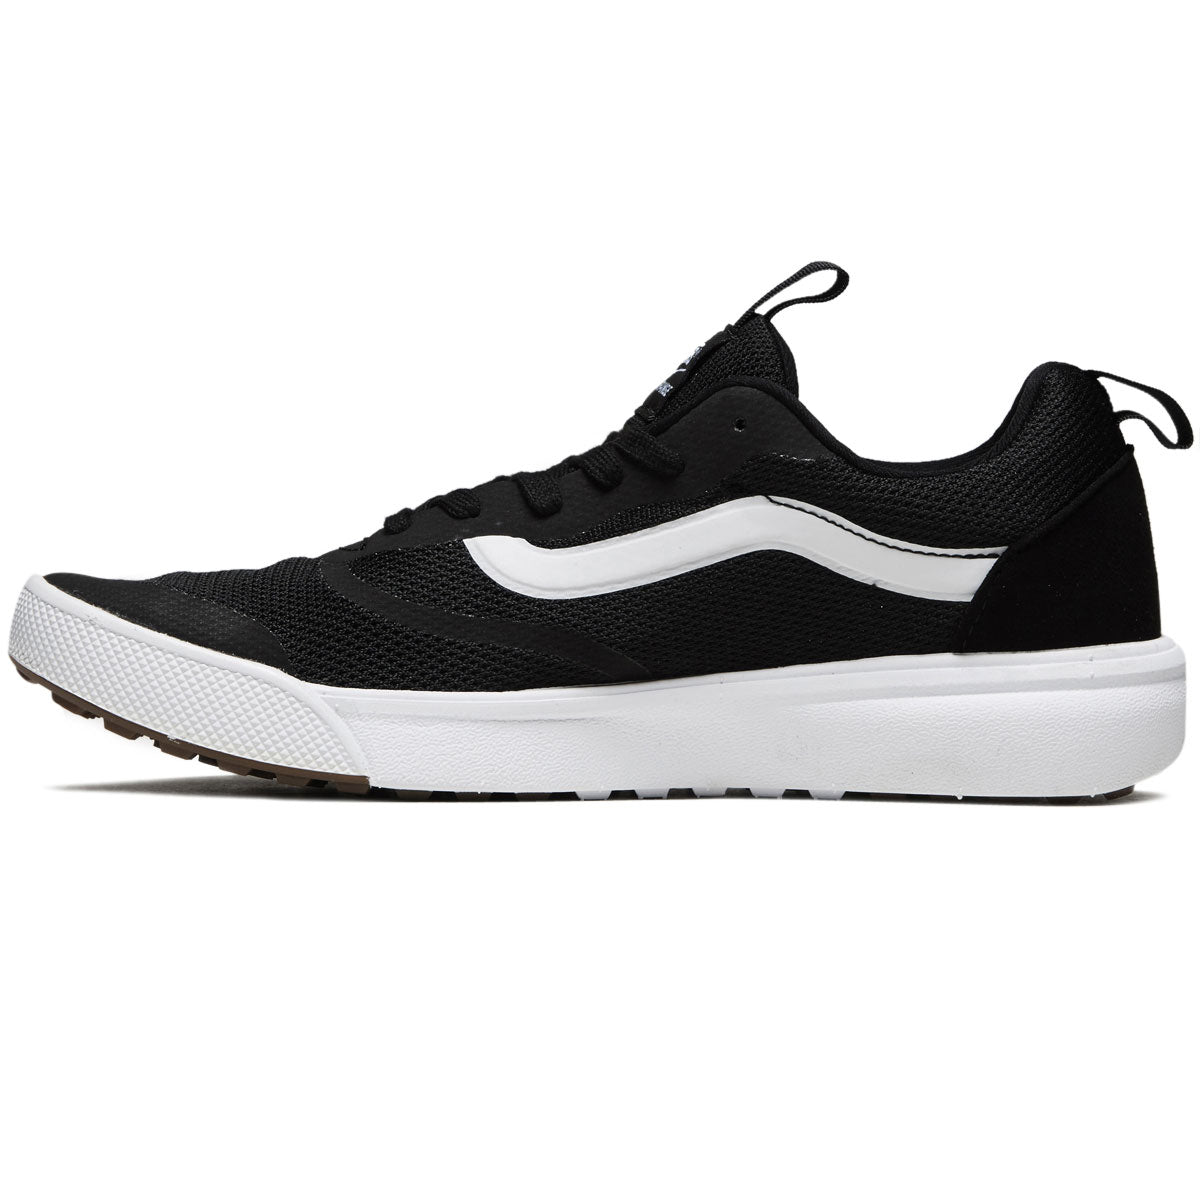 Vans Ultrarange Rapidweld Shoes - Black/White image 2